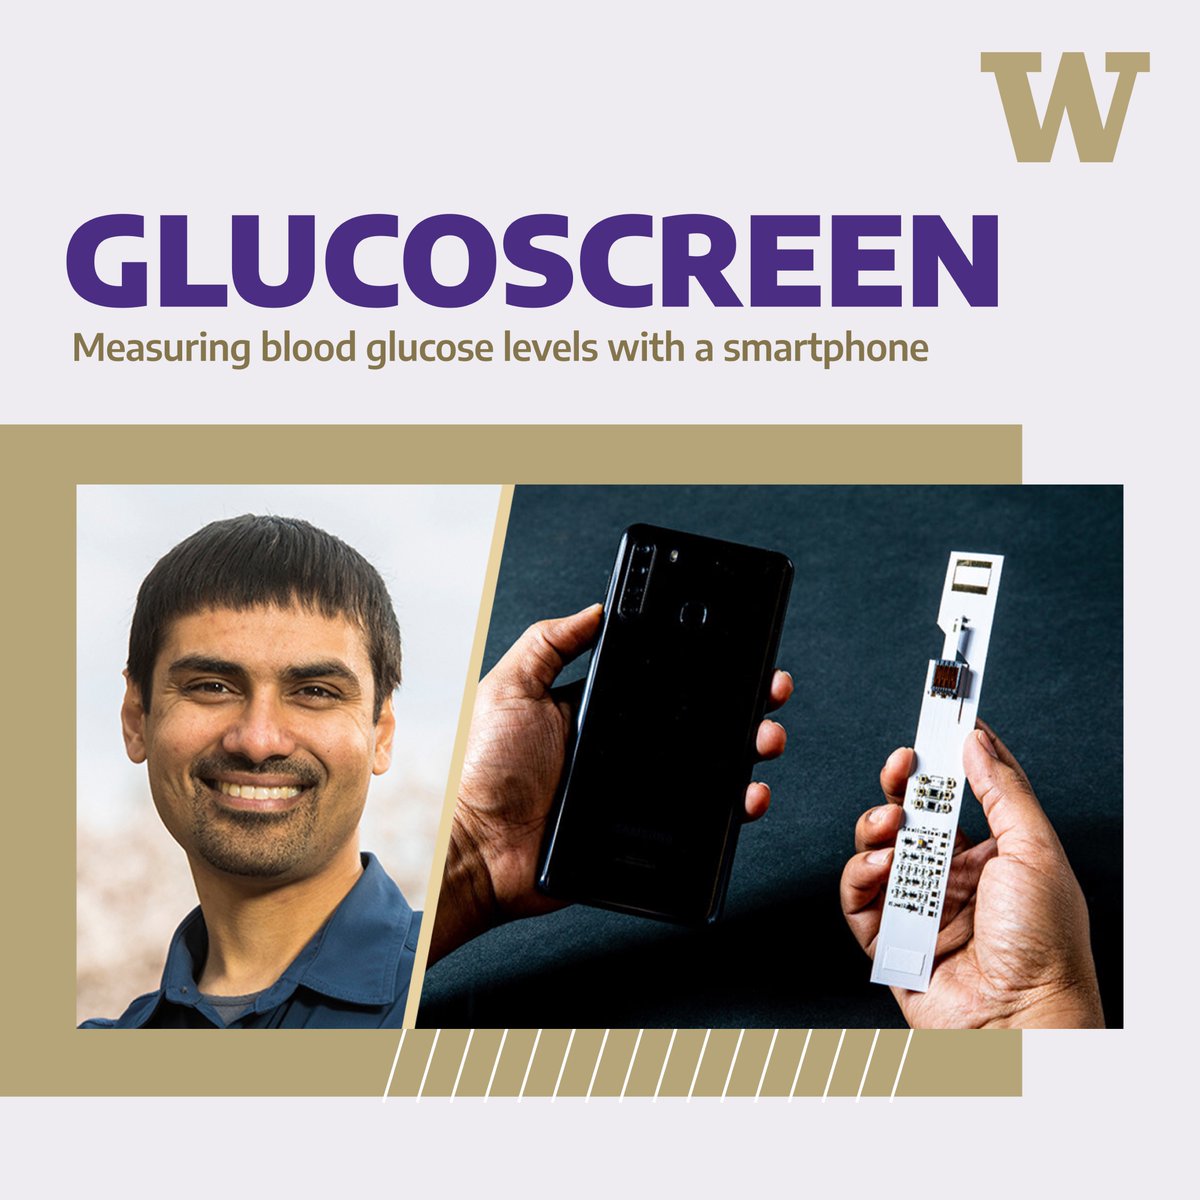 Shwetak Patel is co-leading a team that has developed GlucoScreen, an accessible way to measuring blood glucose levels with a smartphone. UW ECE alumnus Farshid Salemi Parizi is working alongside Patel on the team.

ece.uw.edu/spotlight/gluc… 

#uwece #UWHealthandMedicine